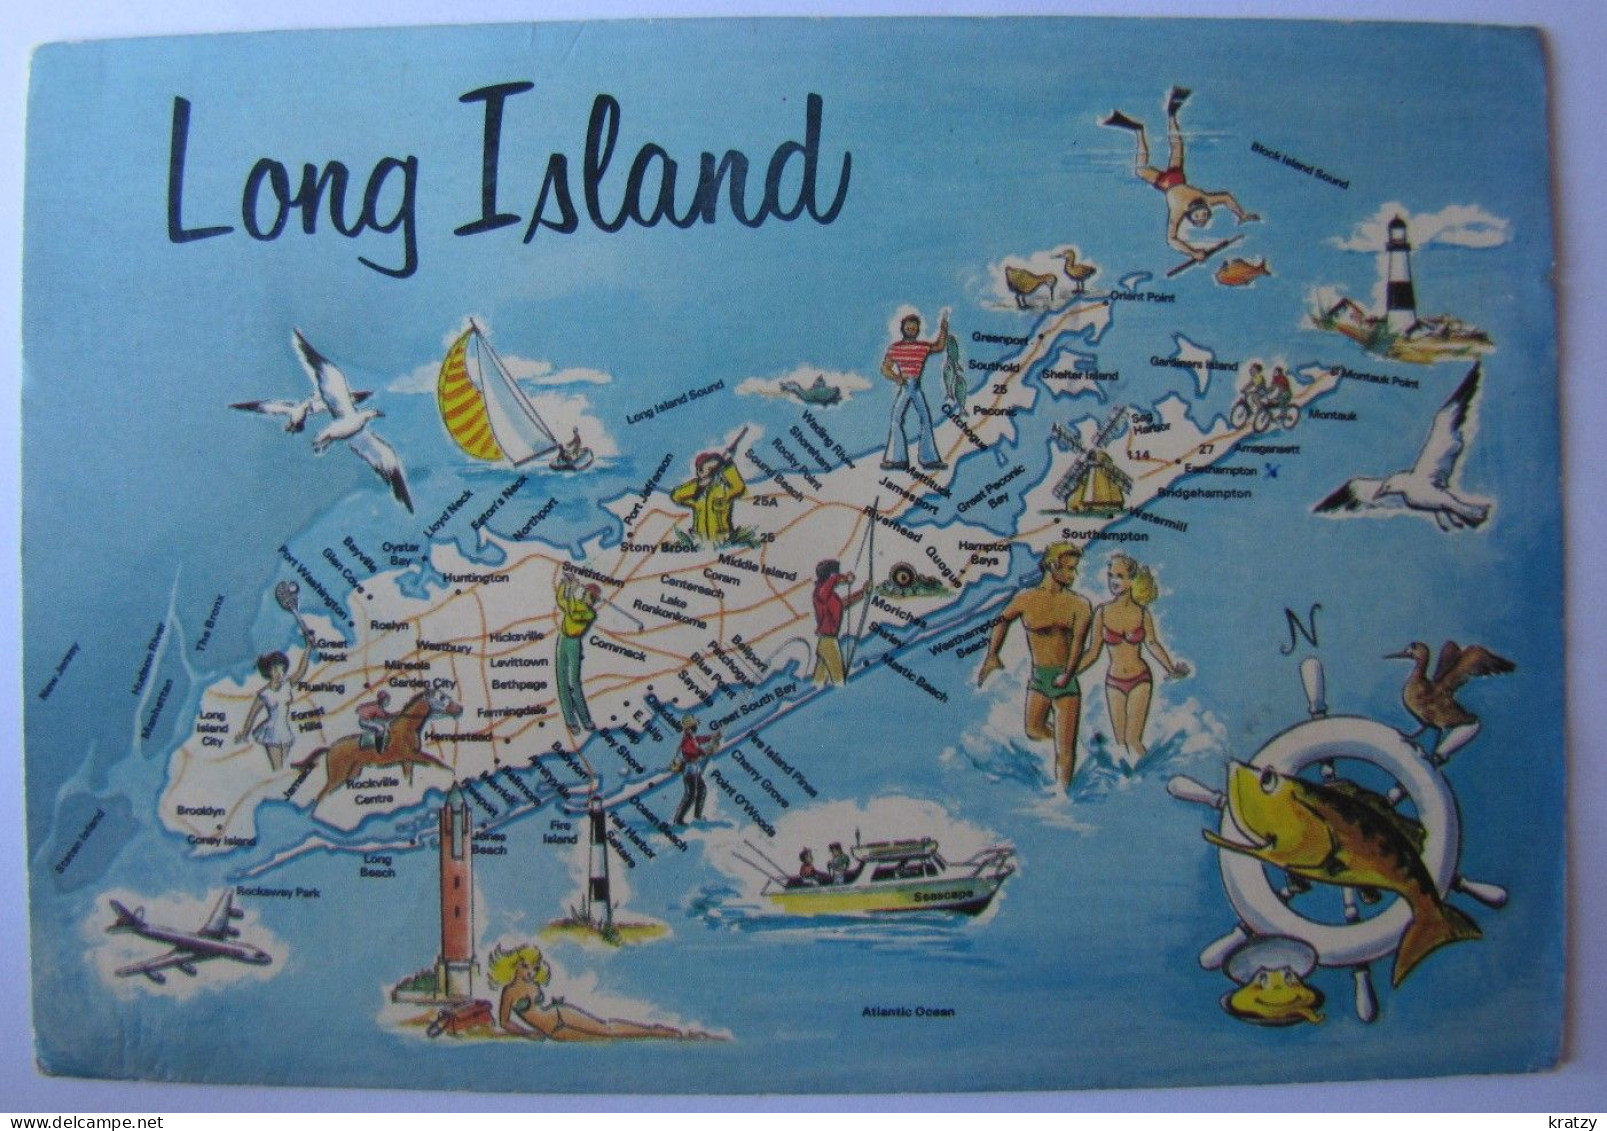 ETATS-UNIS - NEW YORK - LONG ISLAND - Map - Long Island